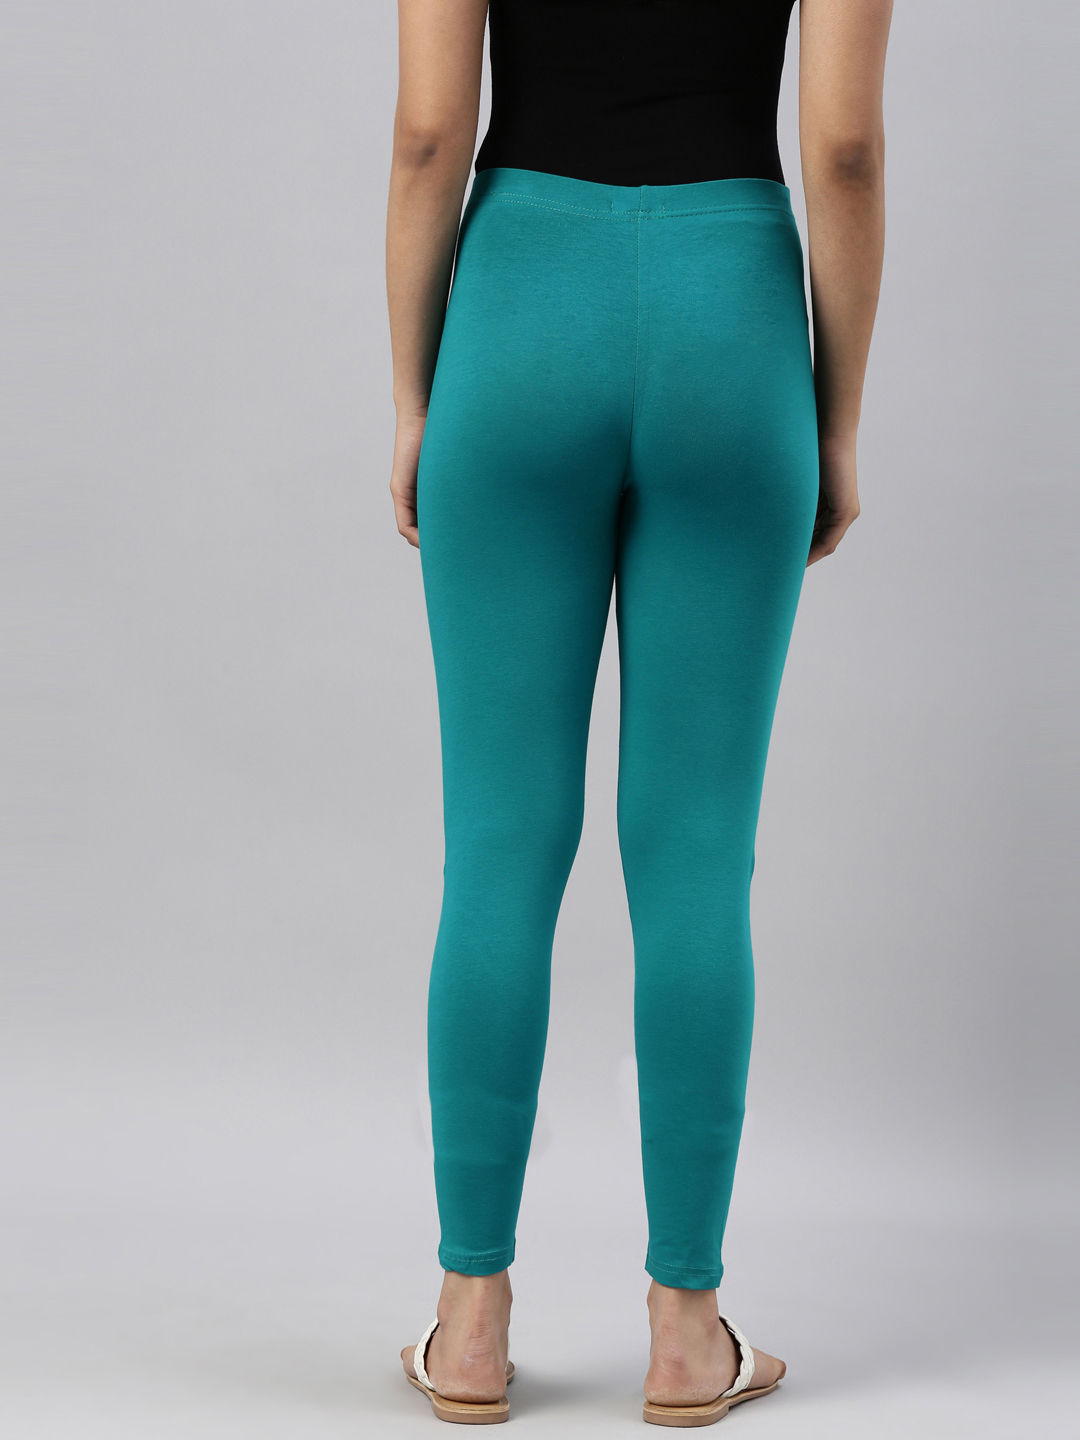 Turquoise Viscose Chudidar Legging | The Pajama Factory